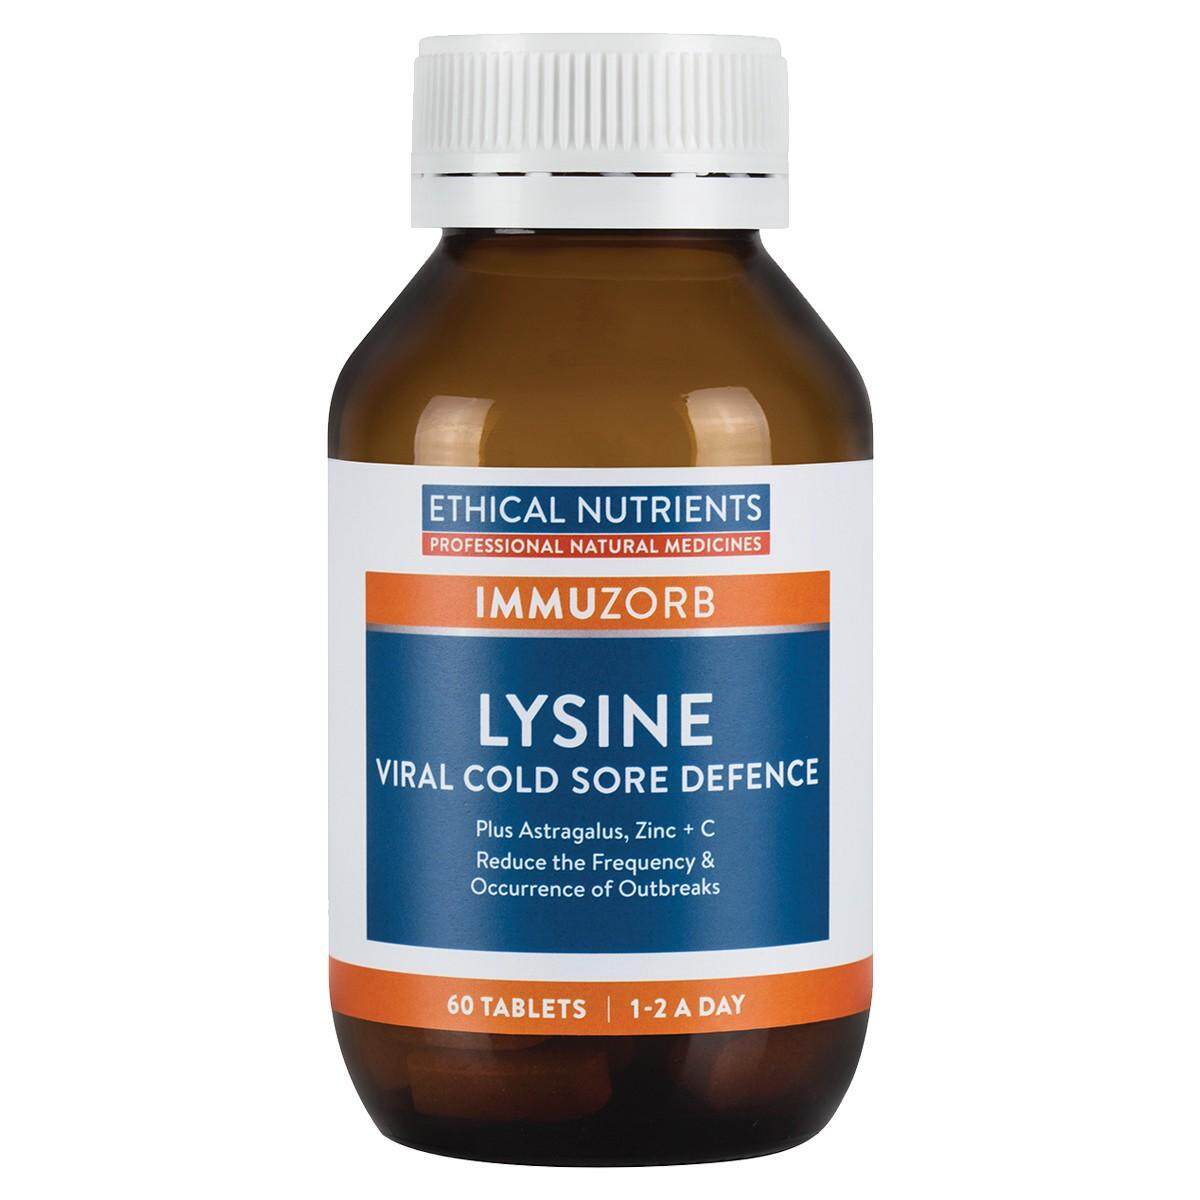 immuzorb lysine viral cold sore defence